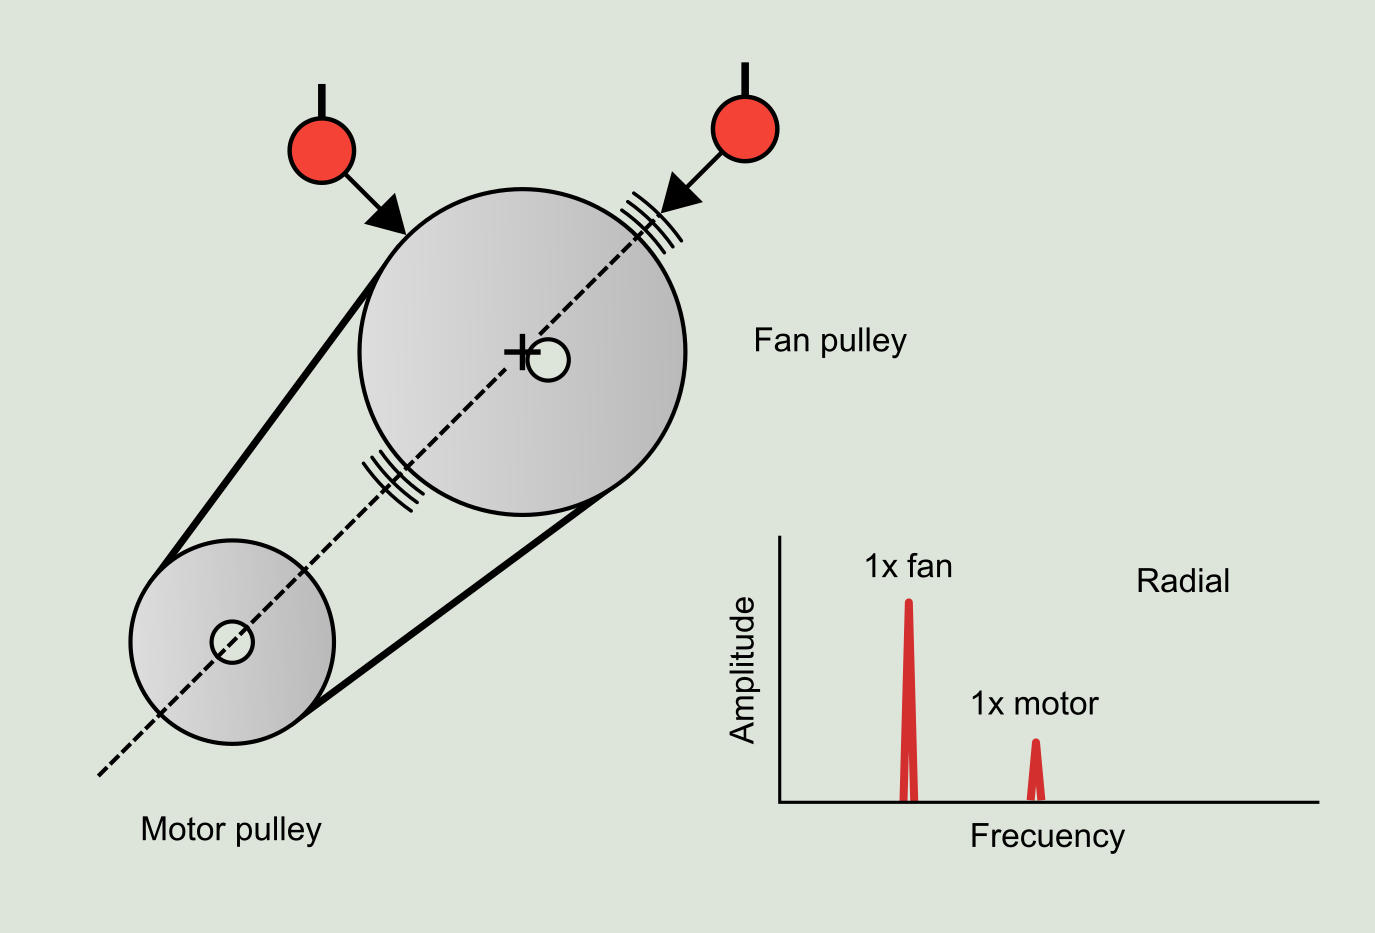 Figure 6.2: Pulley eccentricity